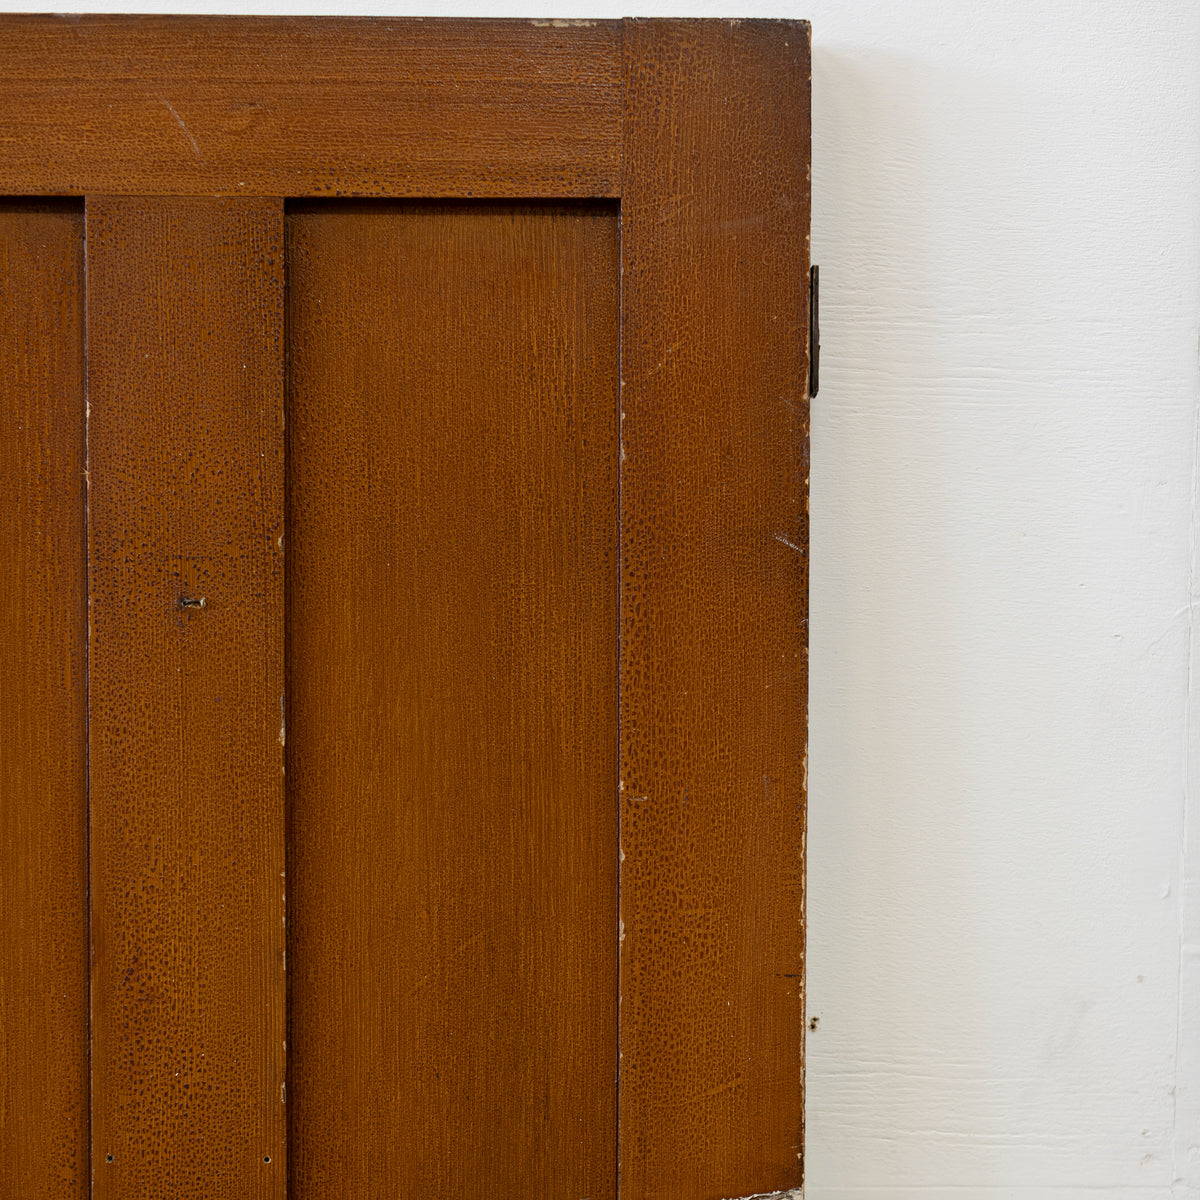 Reclaimed 4 Panel Door 195cm x 75.5cm | The Architectural Forum